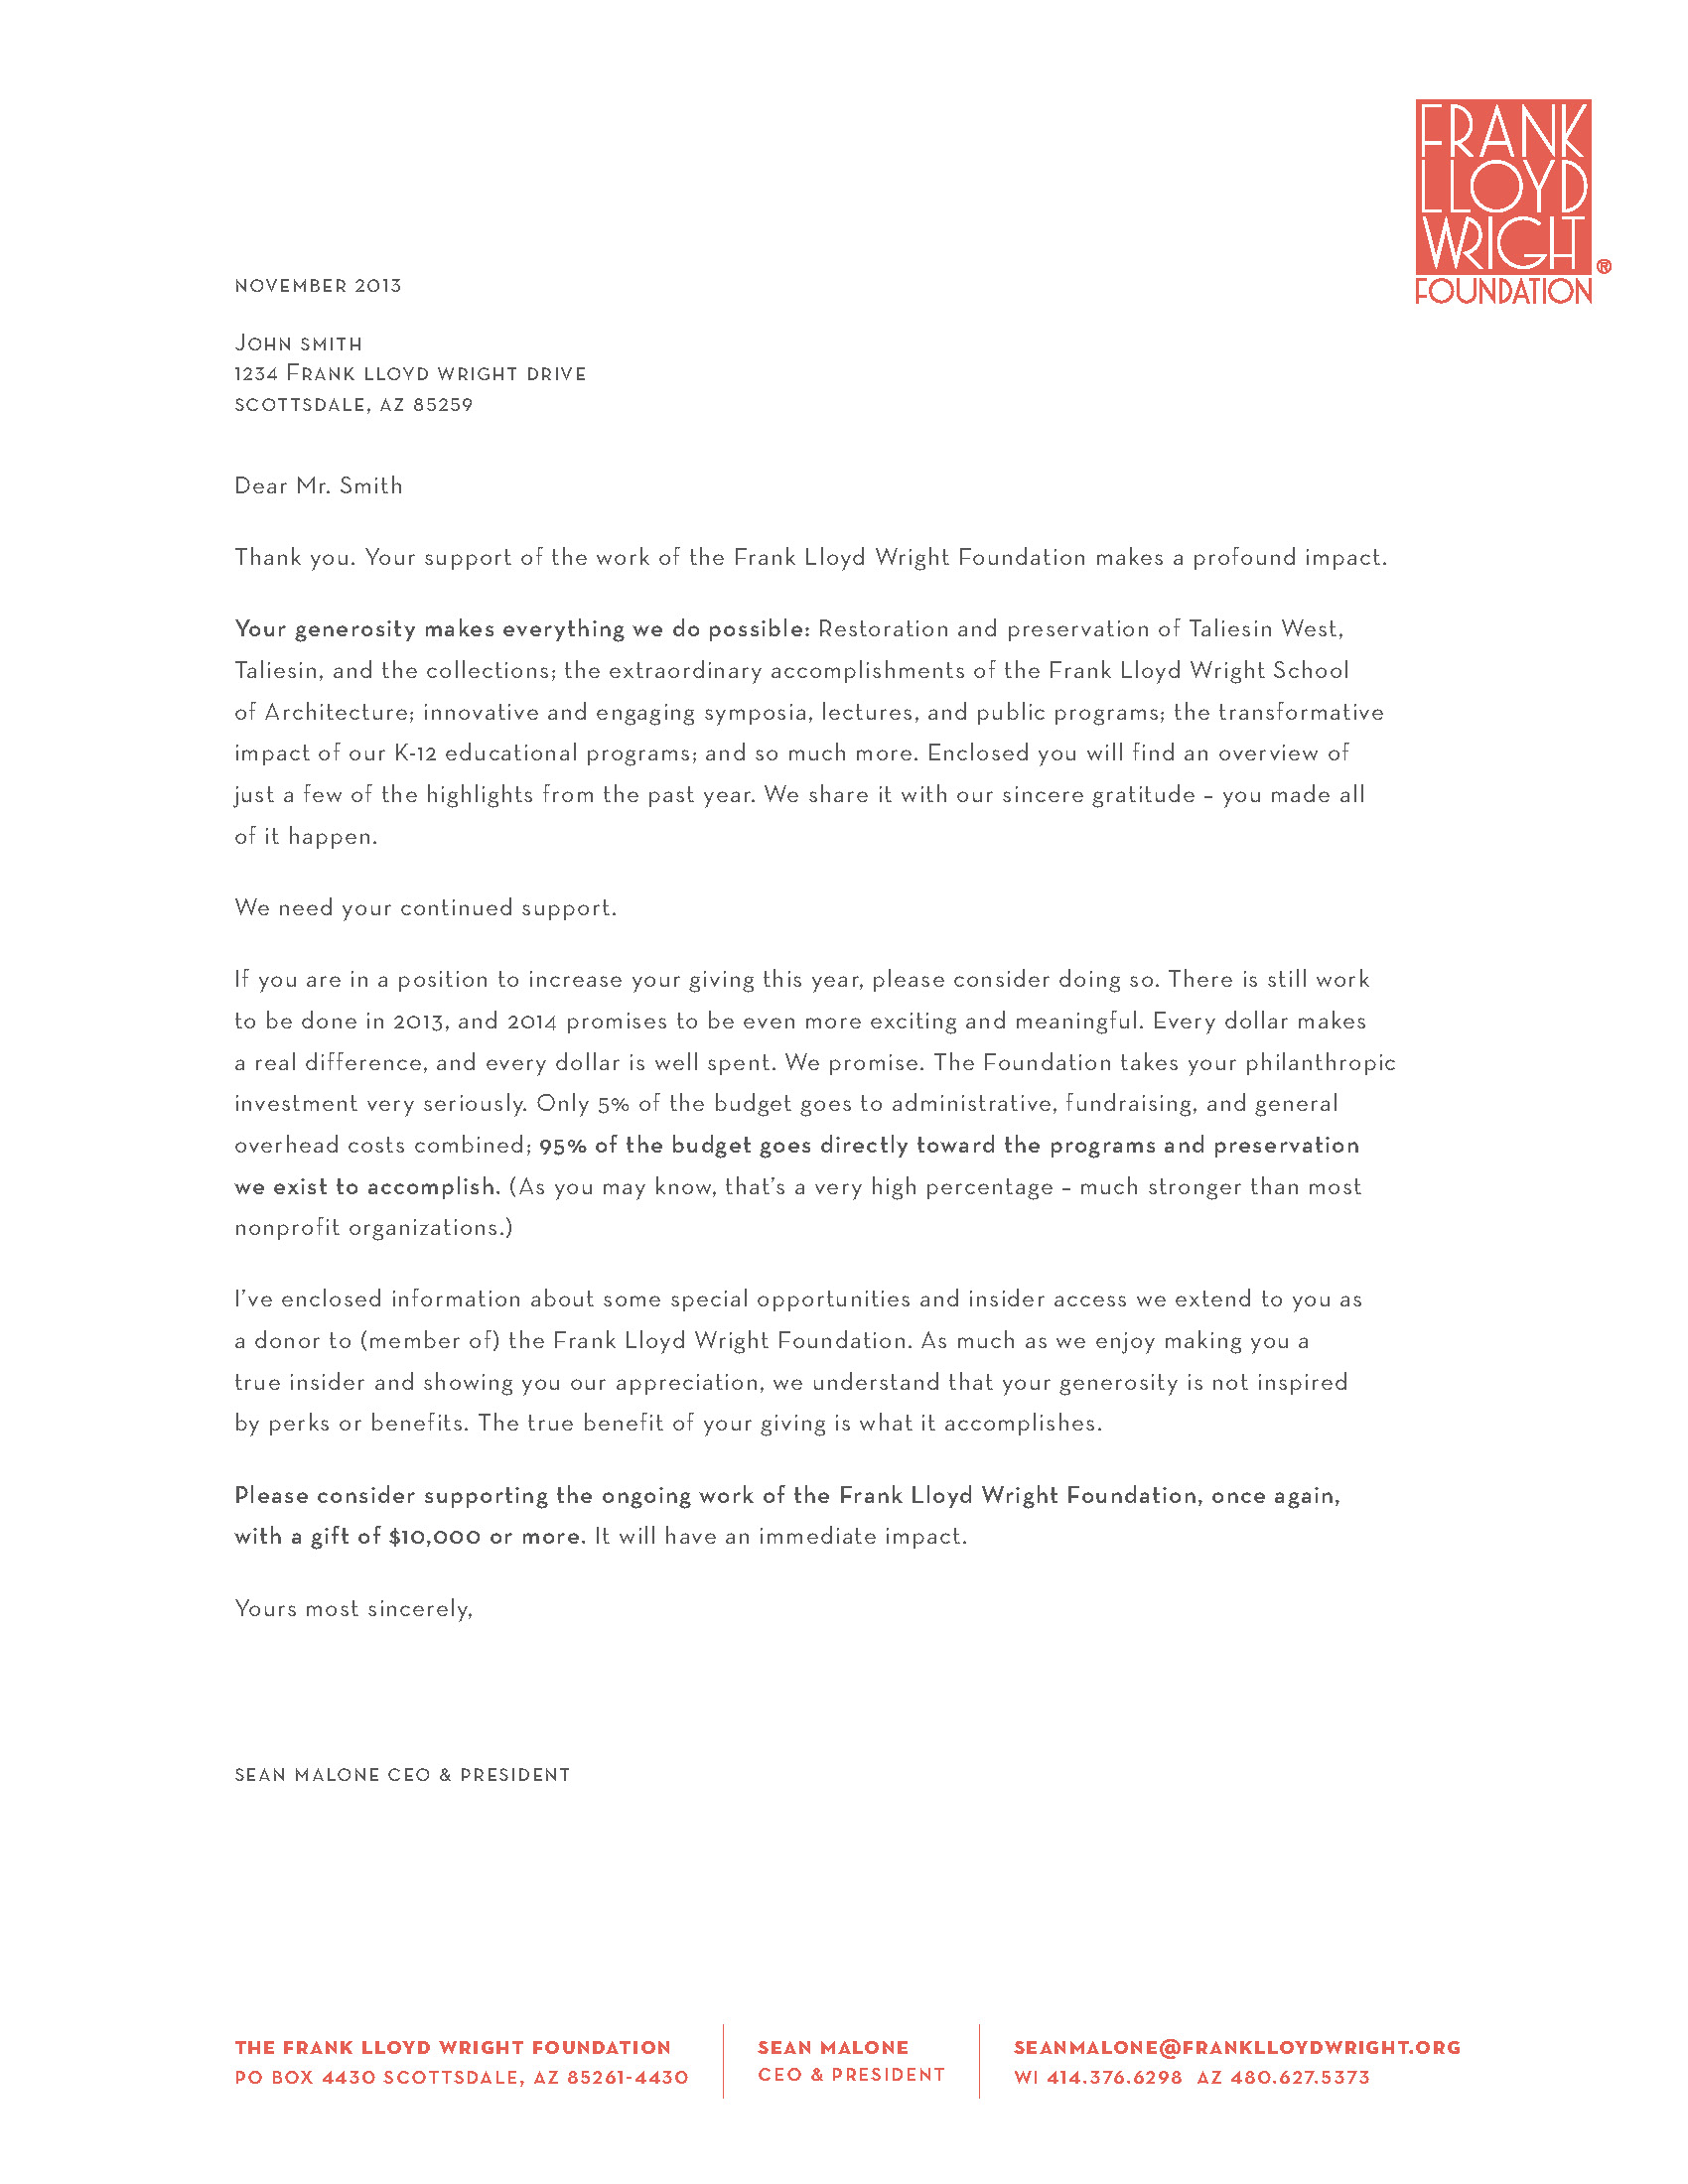 Frank Lloyd Wright Foundation Fundraising Letter